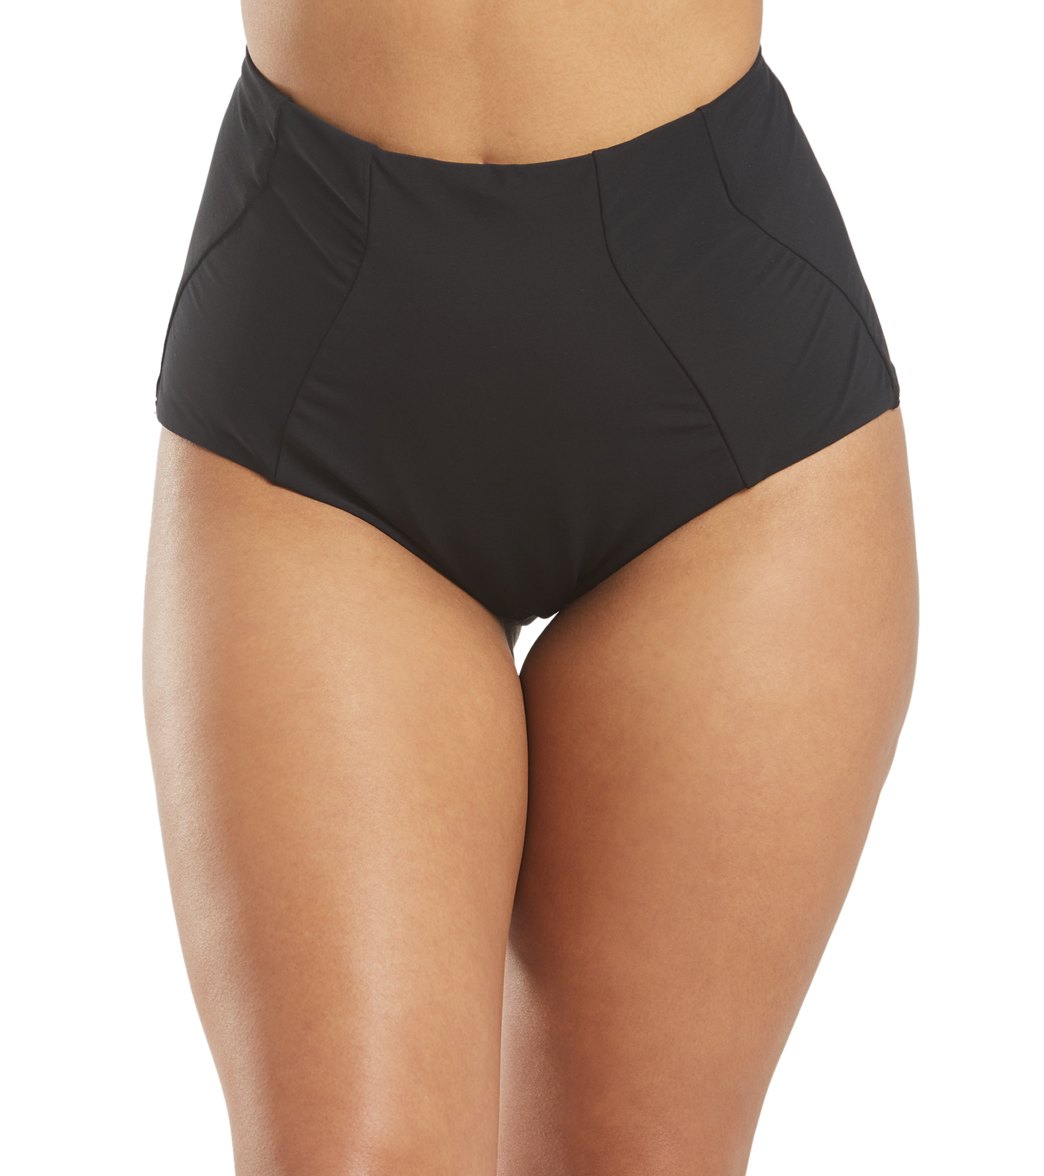 Jets Swimwear Australia Conspire High Waist Bikini Bottom - Black 4 - Swimoutlet.com